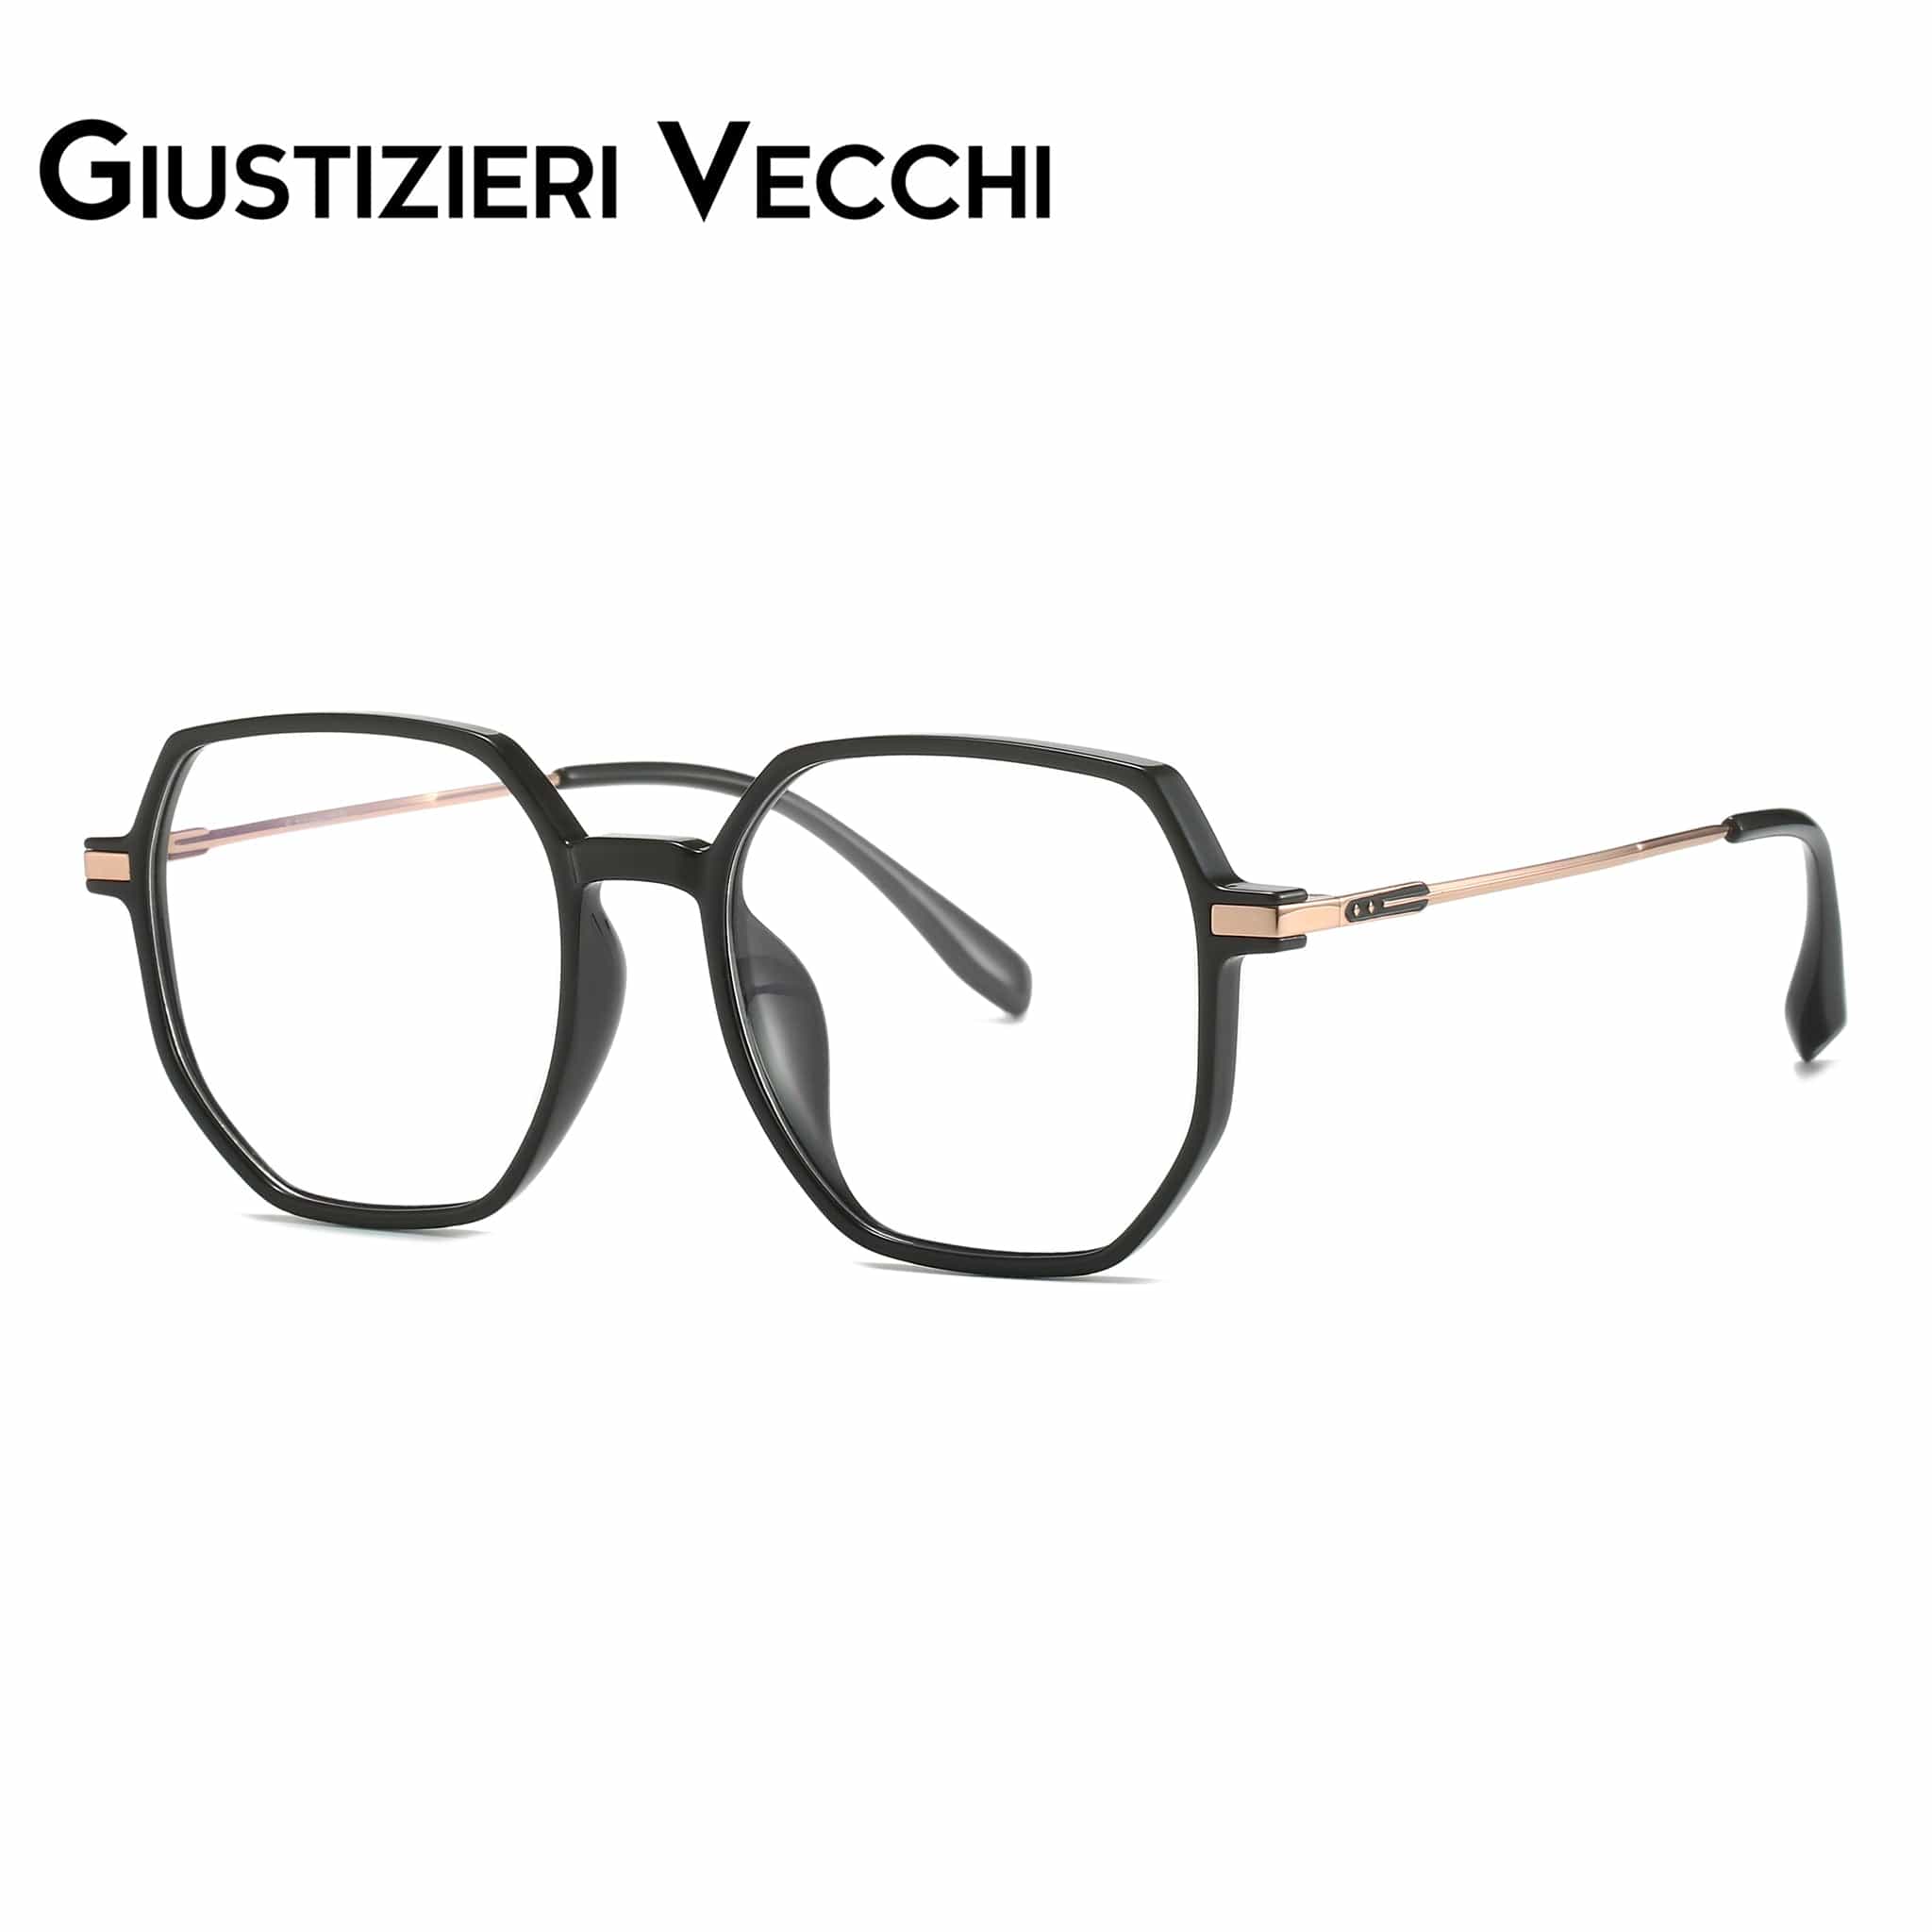 GIUSTIZIERI VECCHI Eyeglasses Medium / Black with Rose Gold Desert Oasis